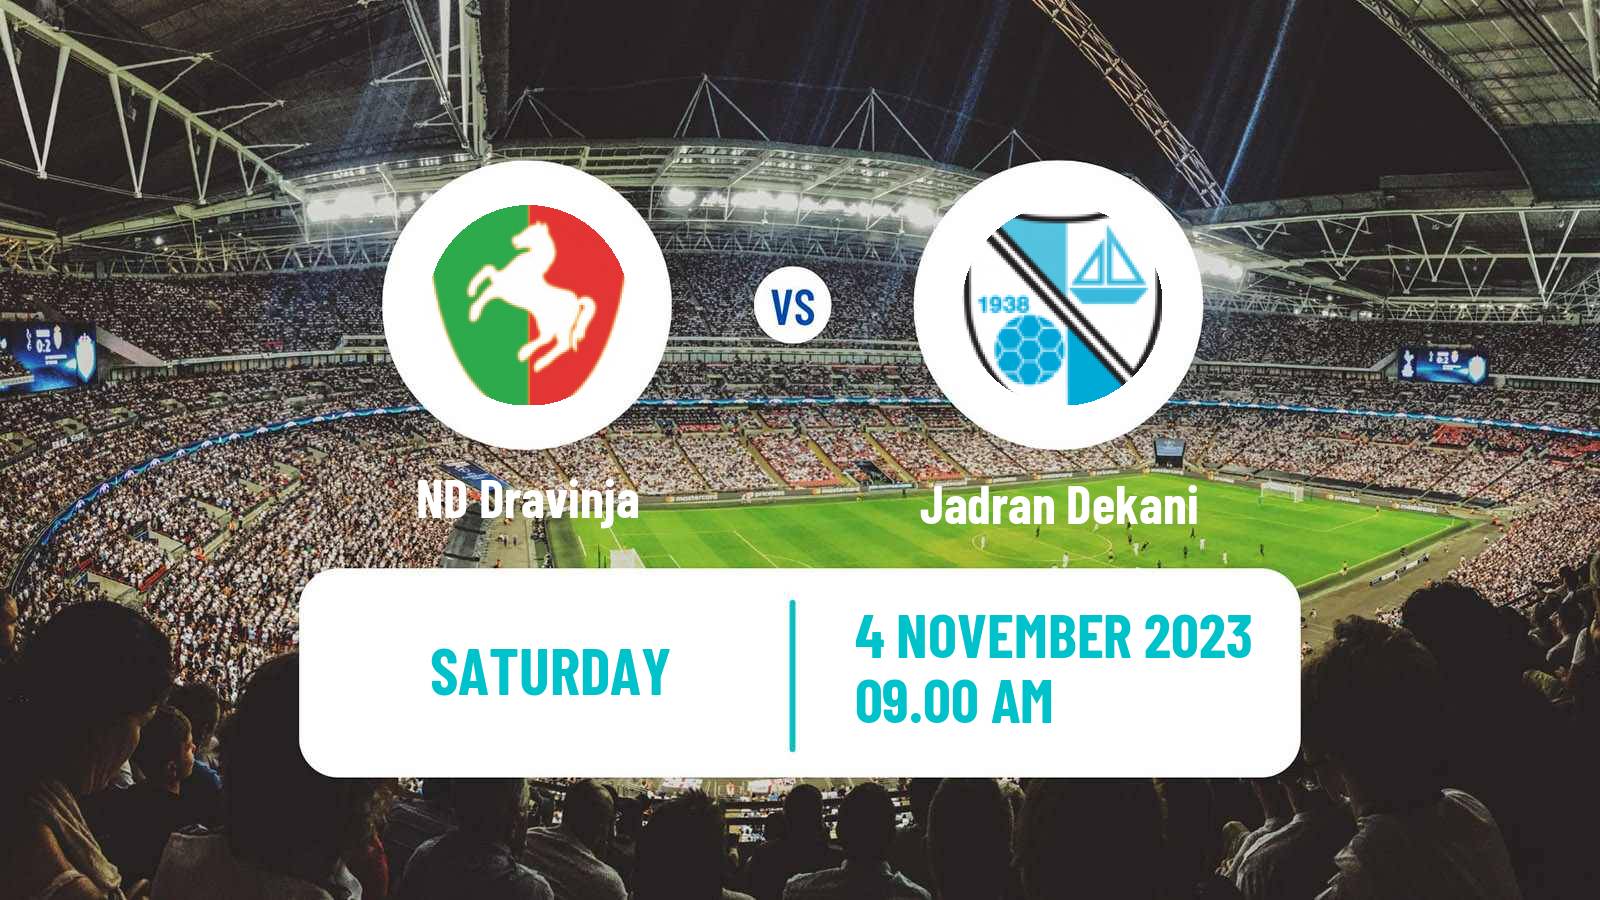 Soccer Slovenian 2 SNL Dravinja - Jadran Dekani